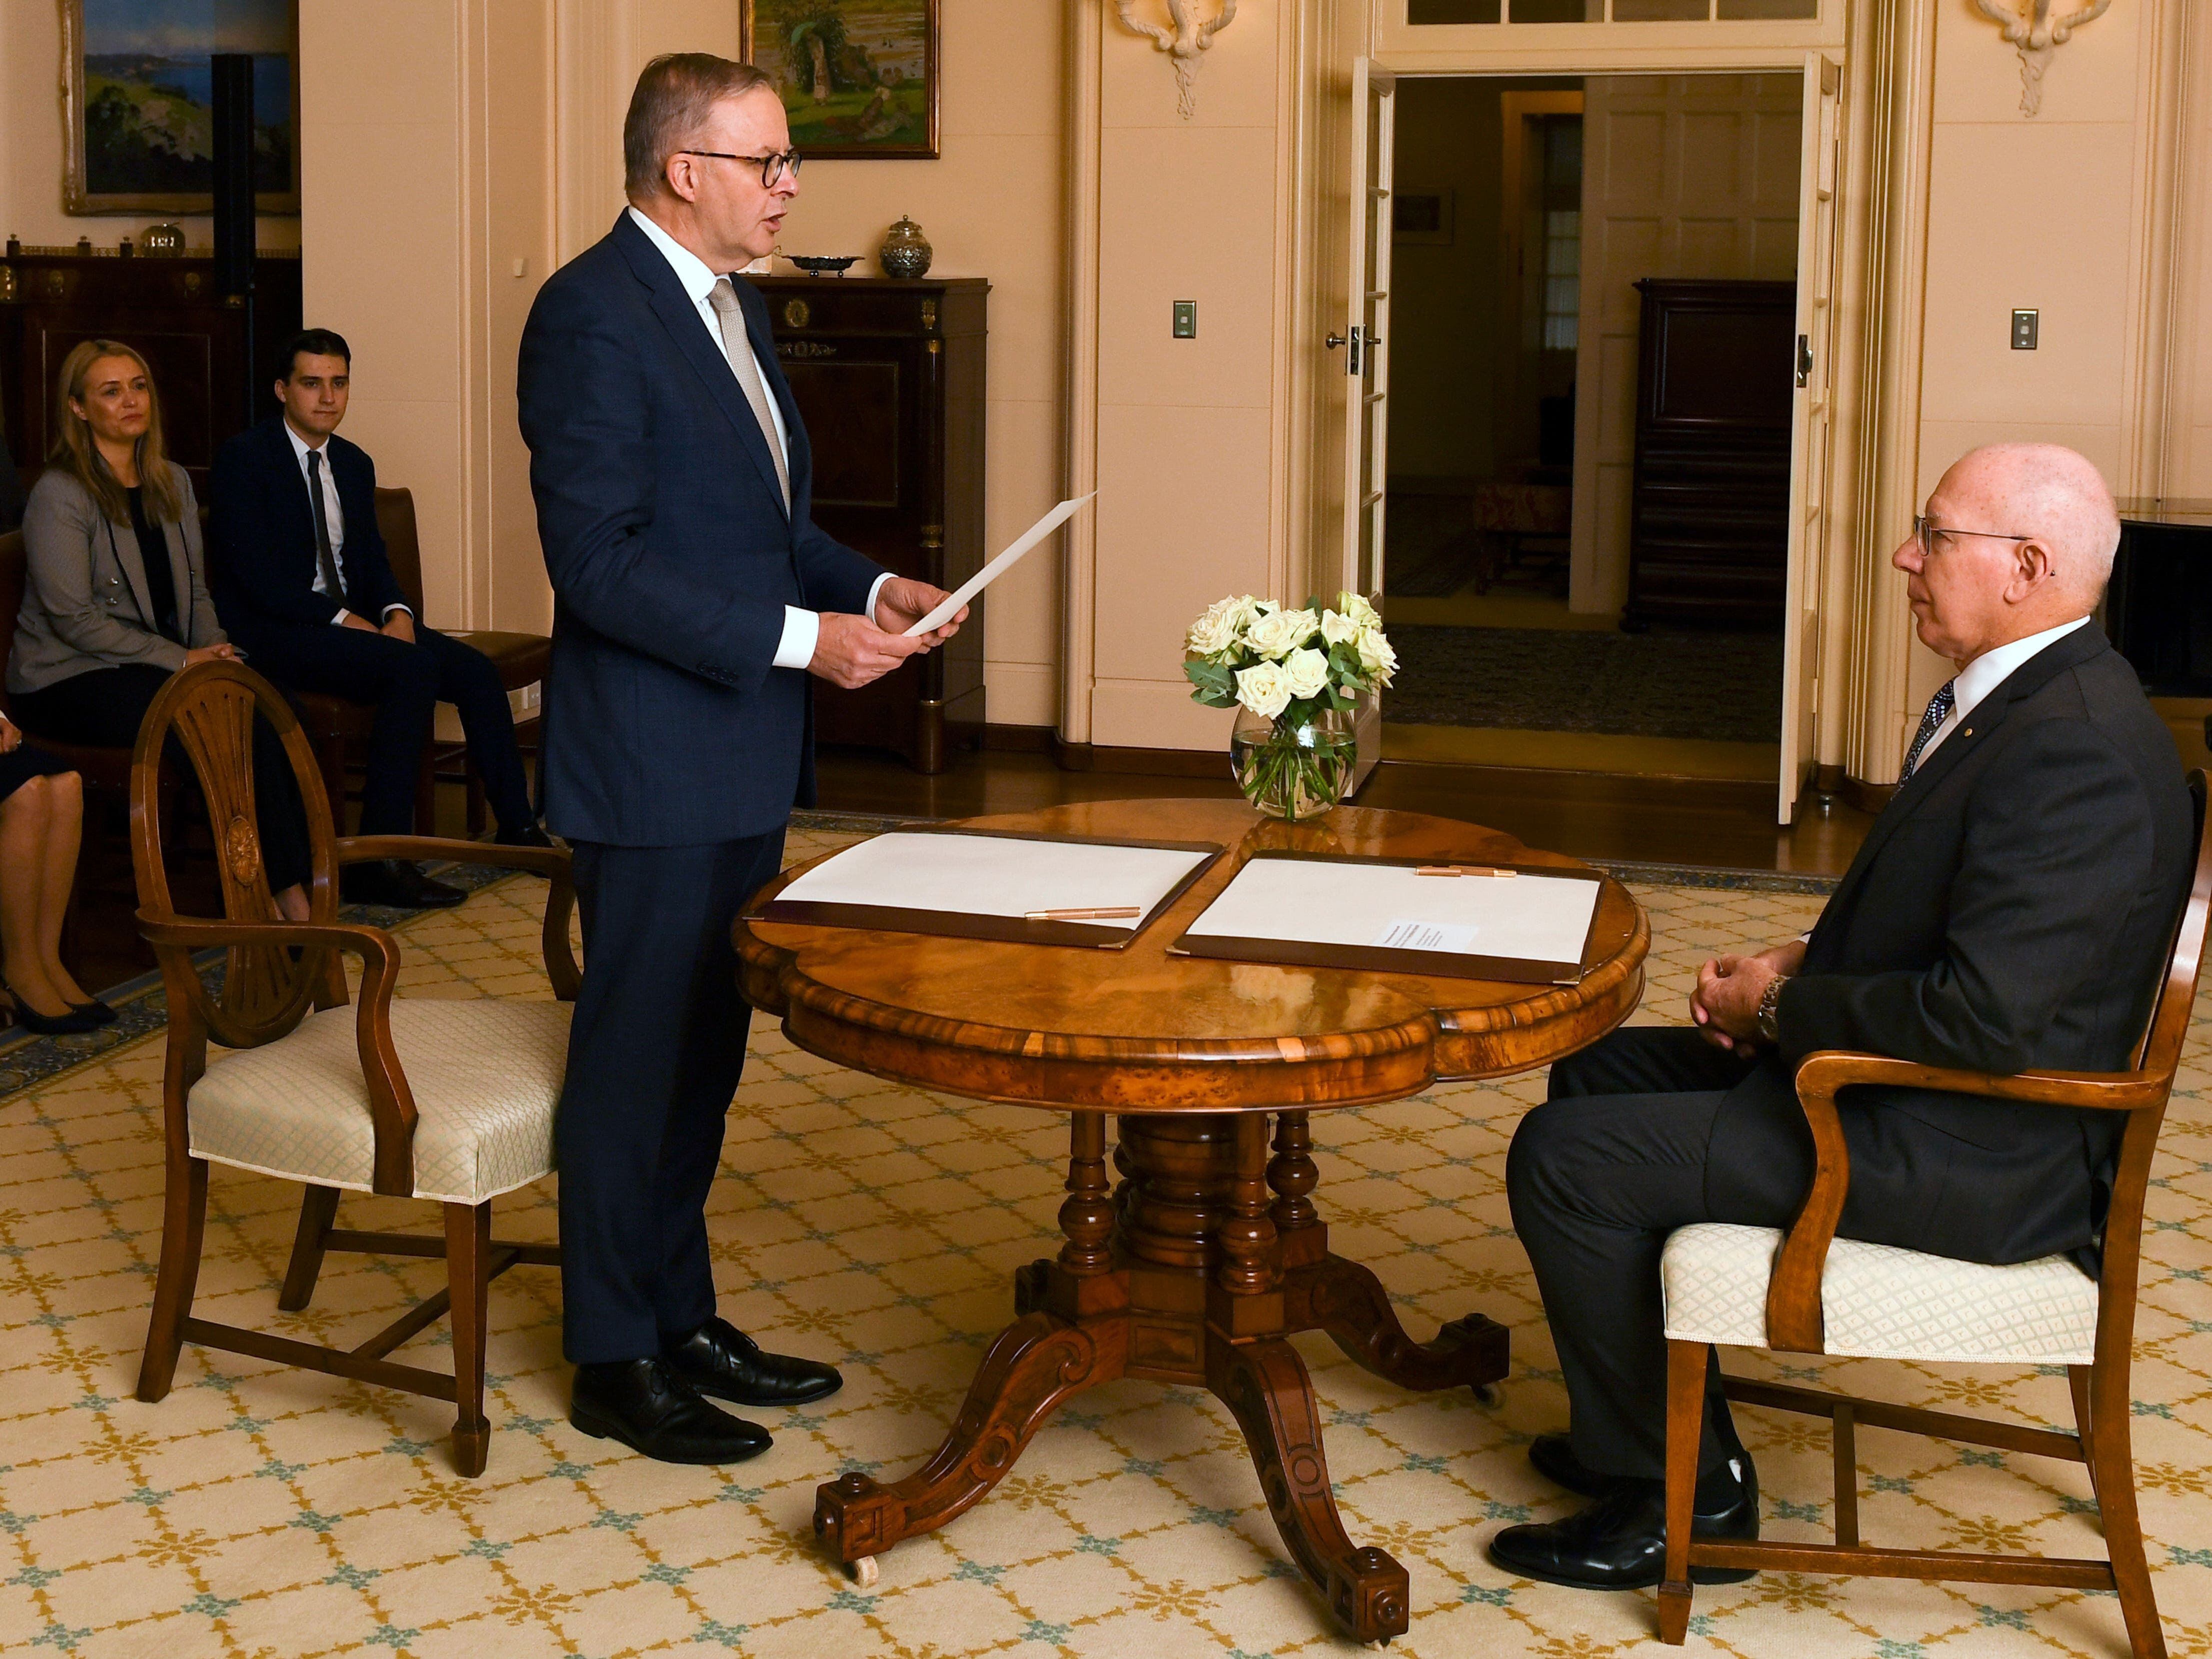 Albanese sworn in as prime minister in Australia ahead of Tokyo summit